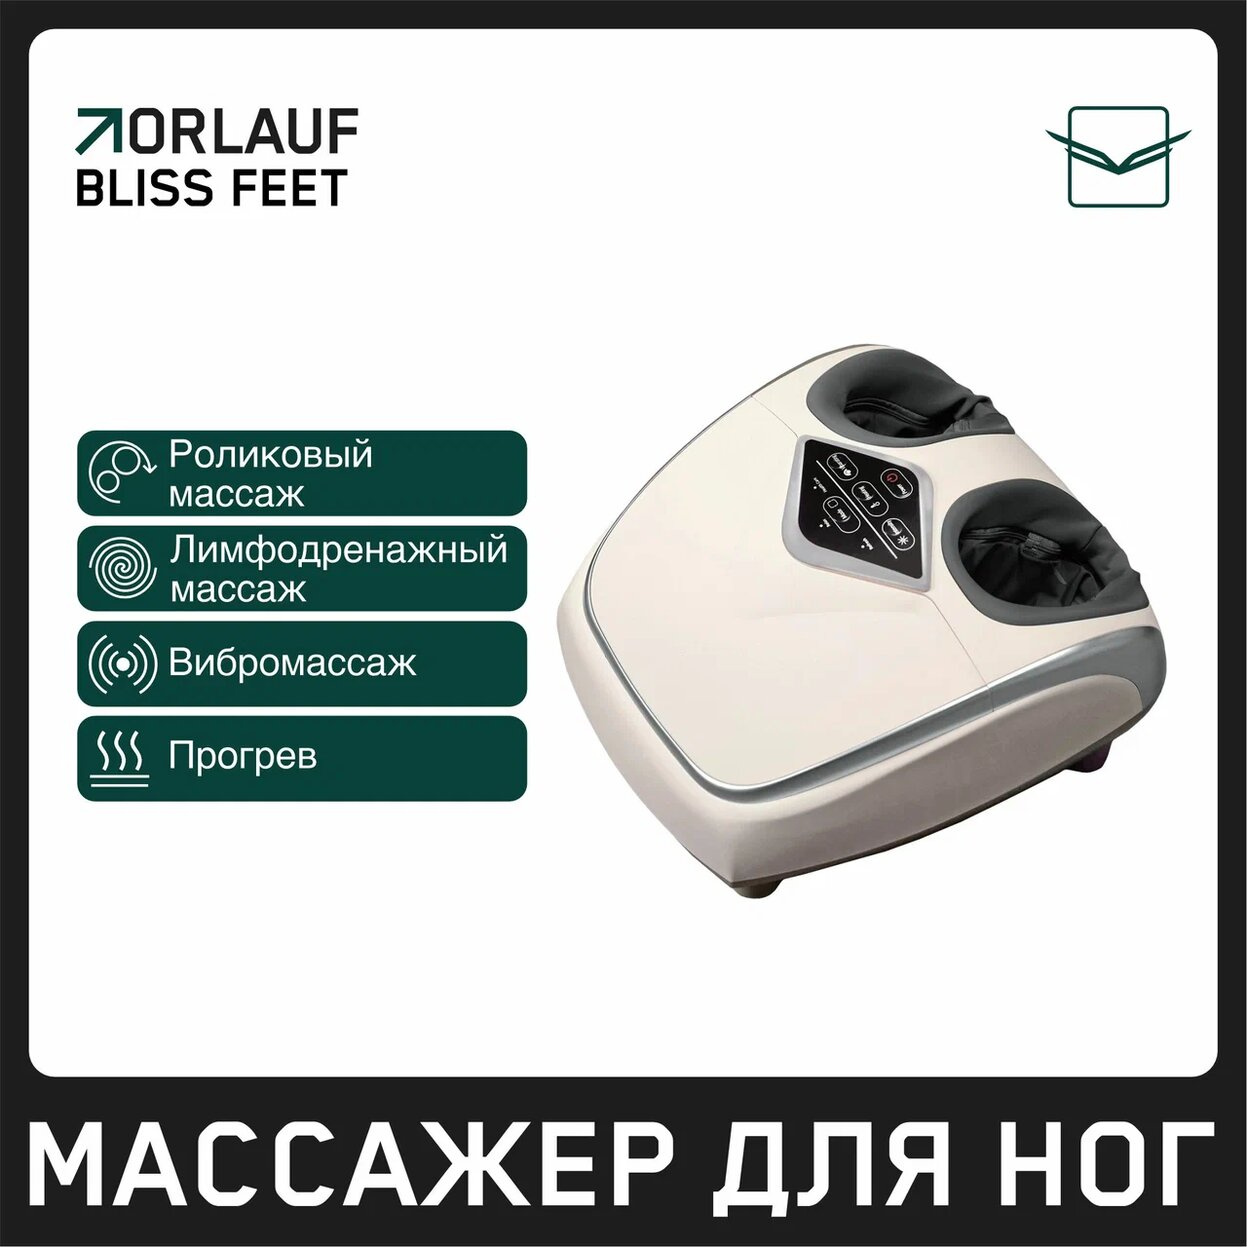 Bliss Feet в Омске по цене 27600 ₽ в категории массажеры Orlauf